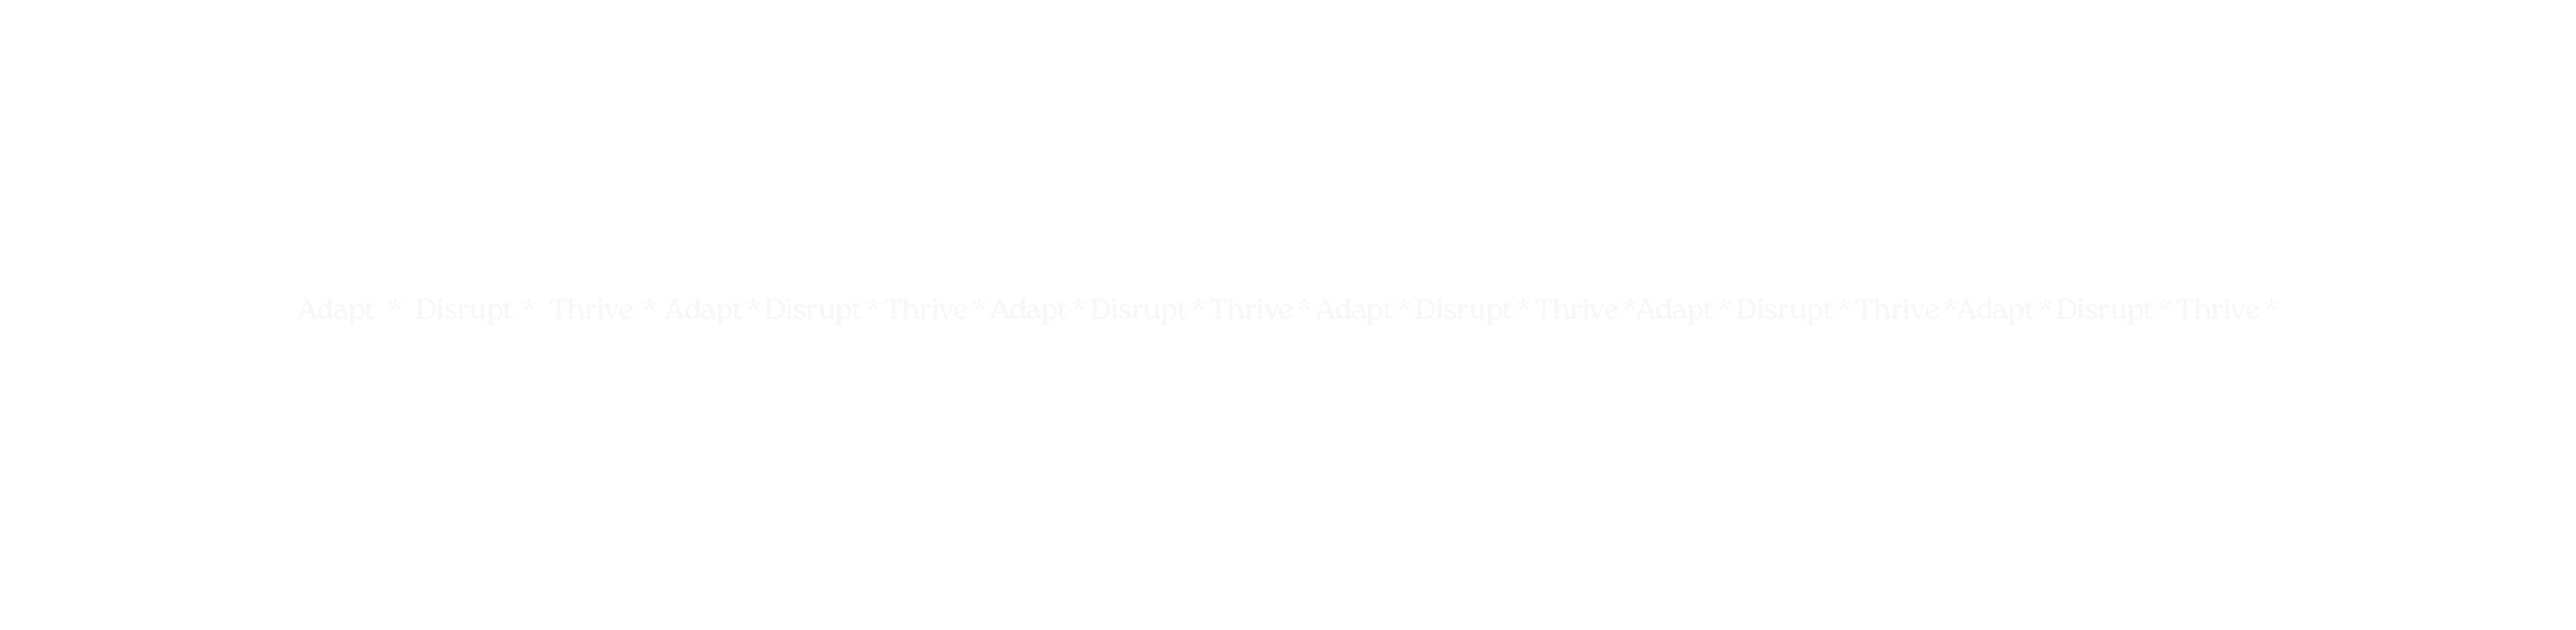 Adapt Disrupt Thrive Adapt Disrupt Thrive Adapt Disrupt Thrive Adapt Disrupt Thrive Adapt Disrupt Thrive Adapt Disrupt Thrive